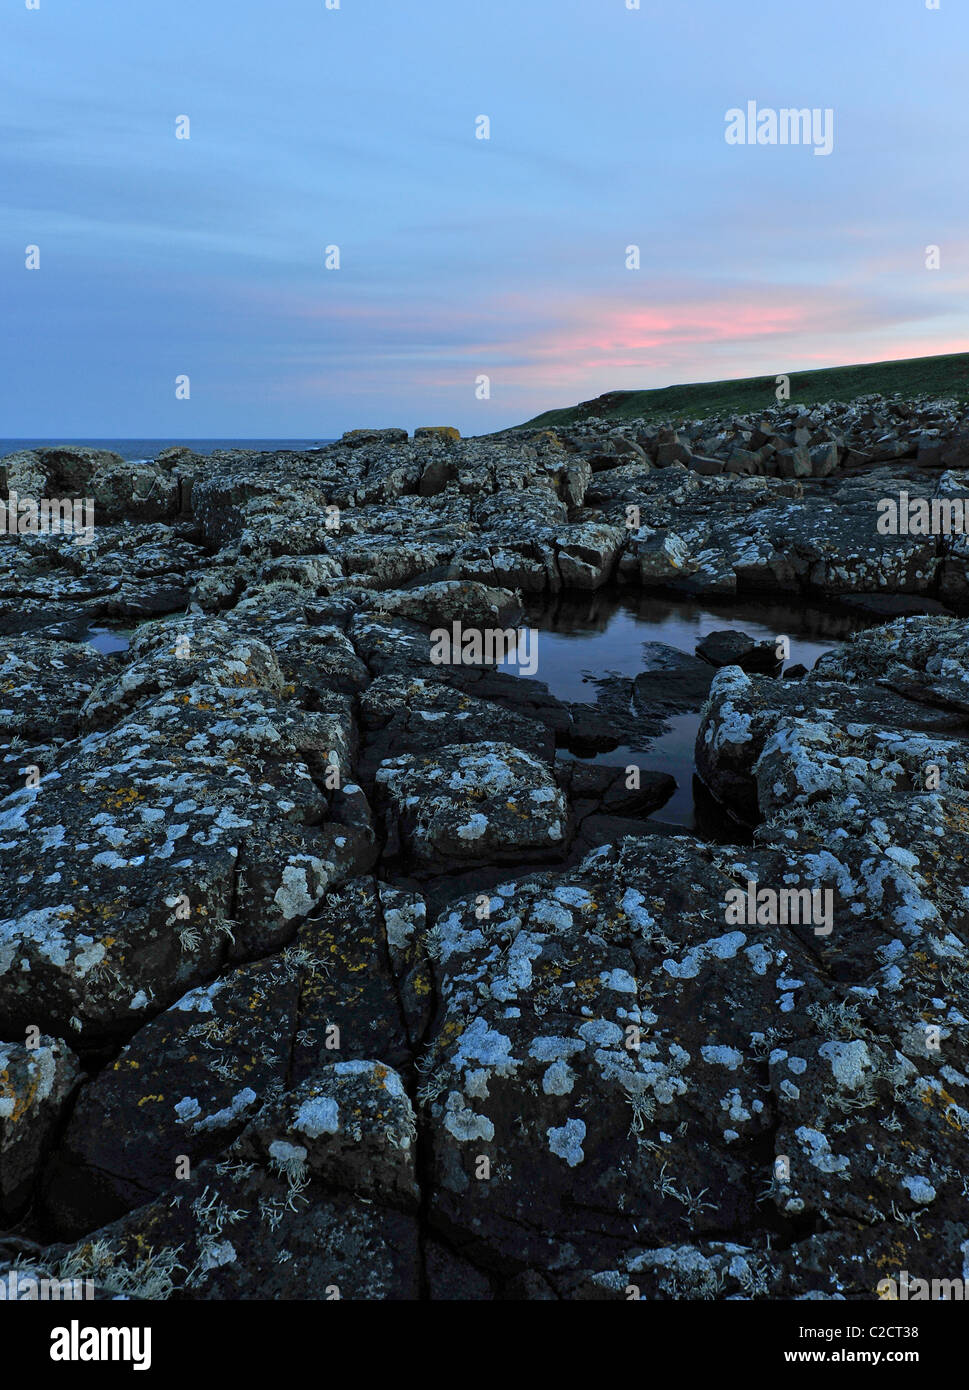 Seashore rocks at sunset. Stock Photo